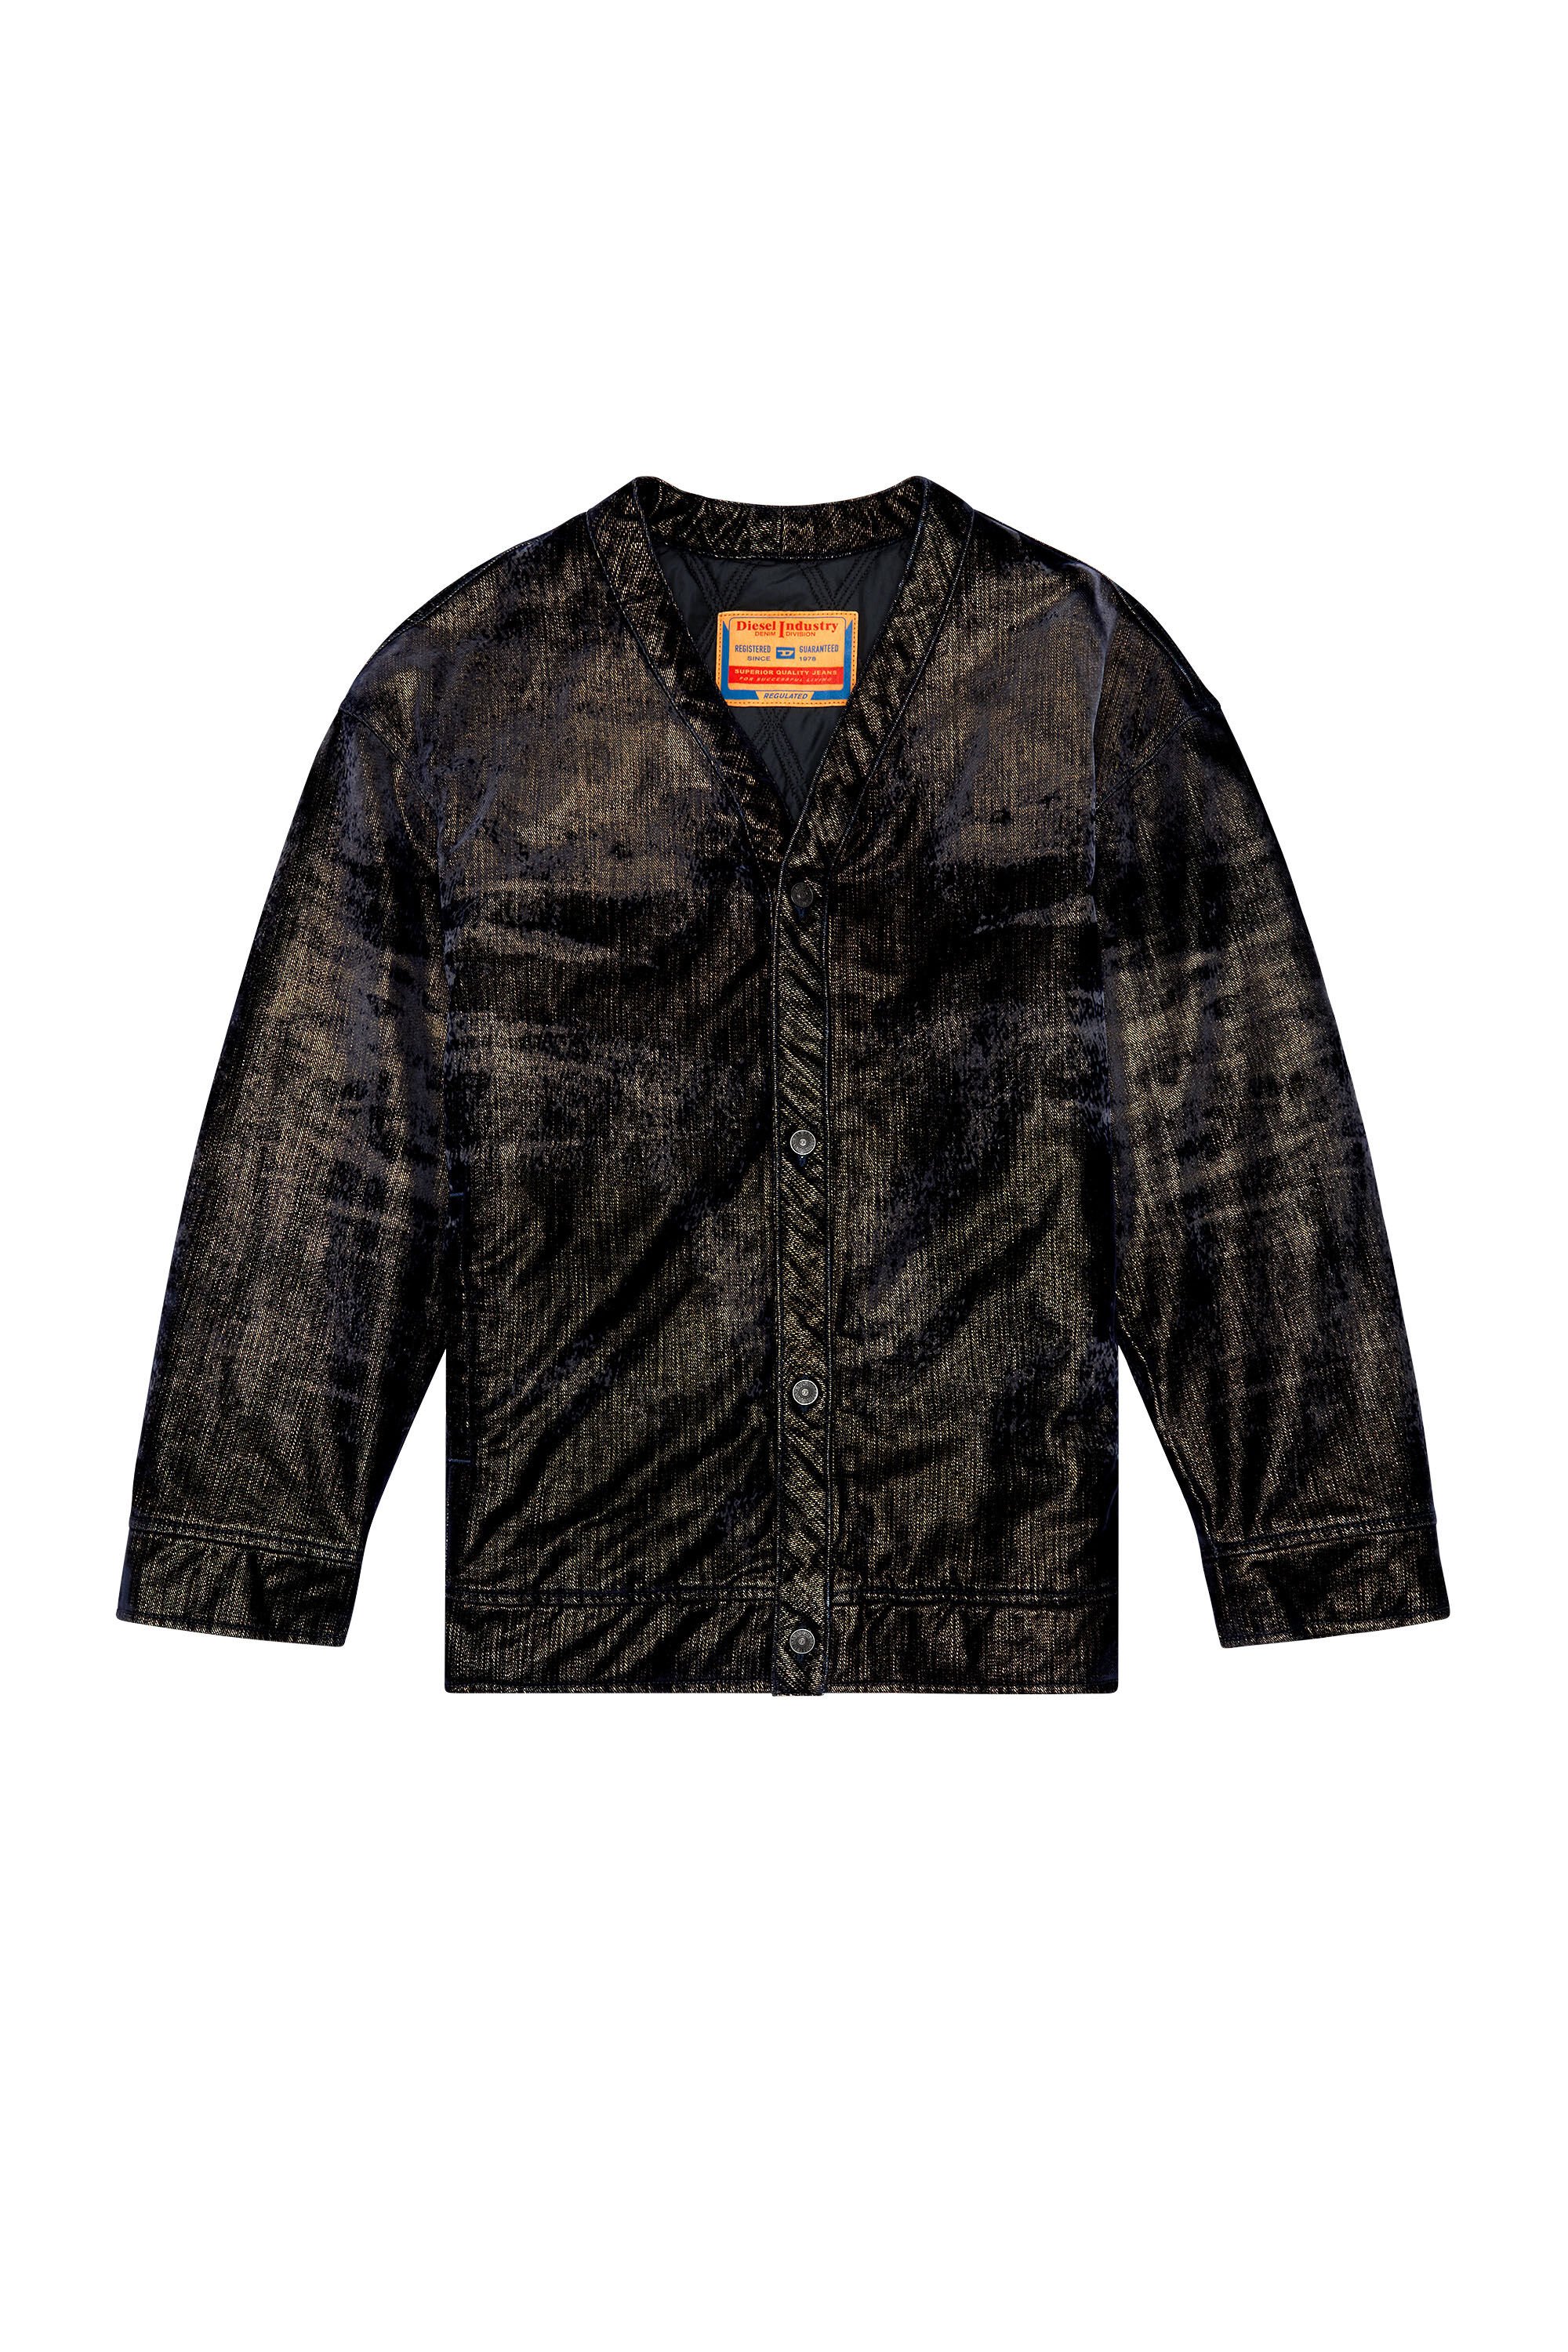 Diesel - D-CONF-S, Man Jacket in shimmery denim in Multicolor - Image 2